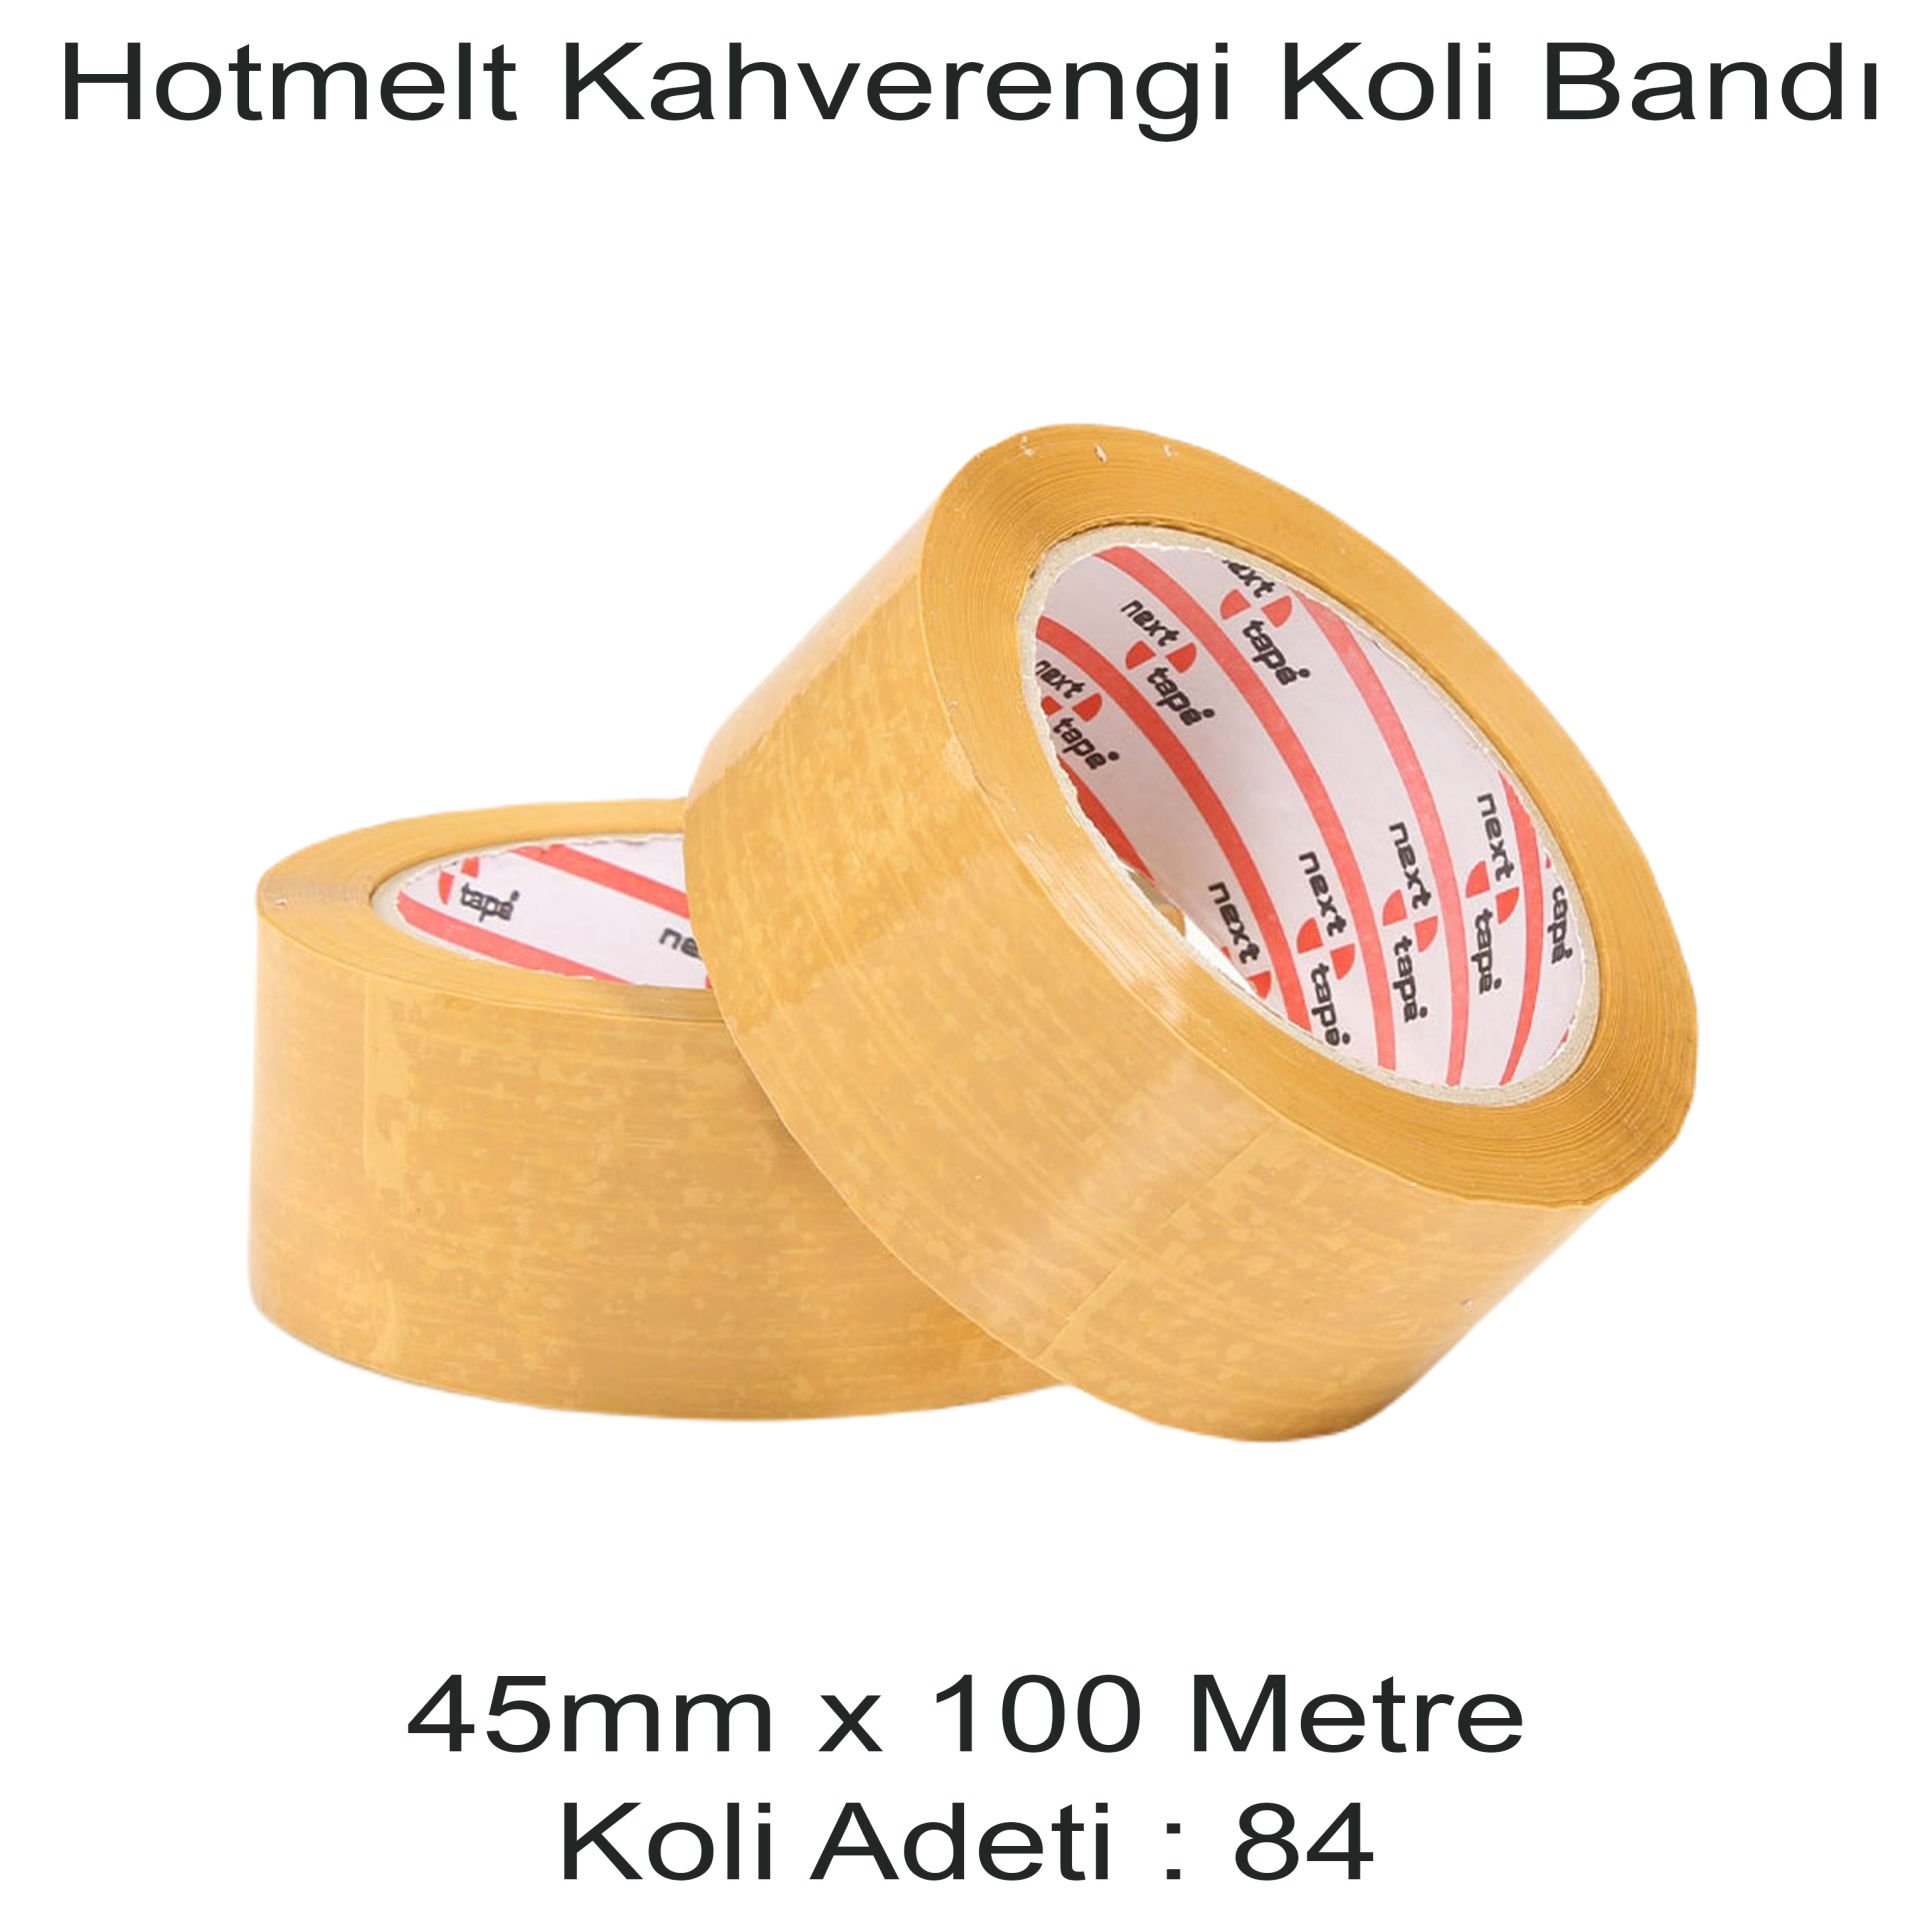 NEXT TAPE Hotmelt Kahverengi Koli Bandı 45mm x 100 Metre (84 Adet)